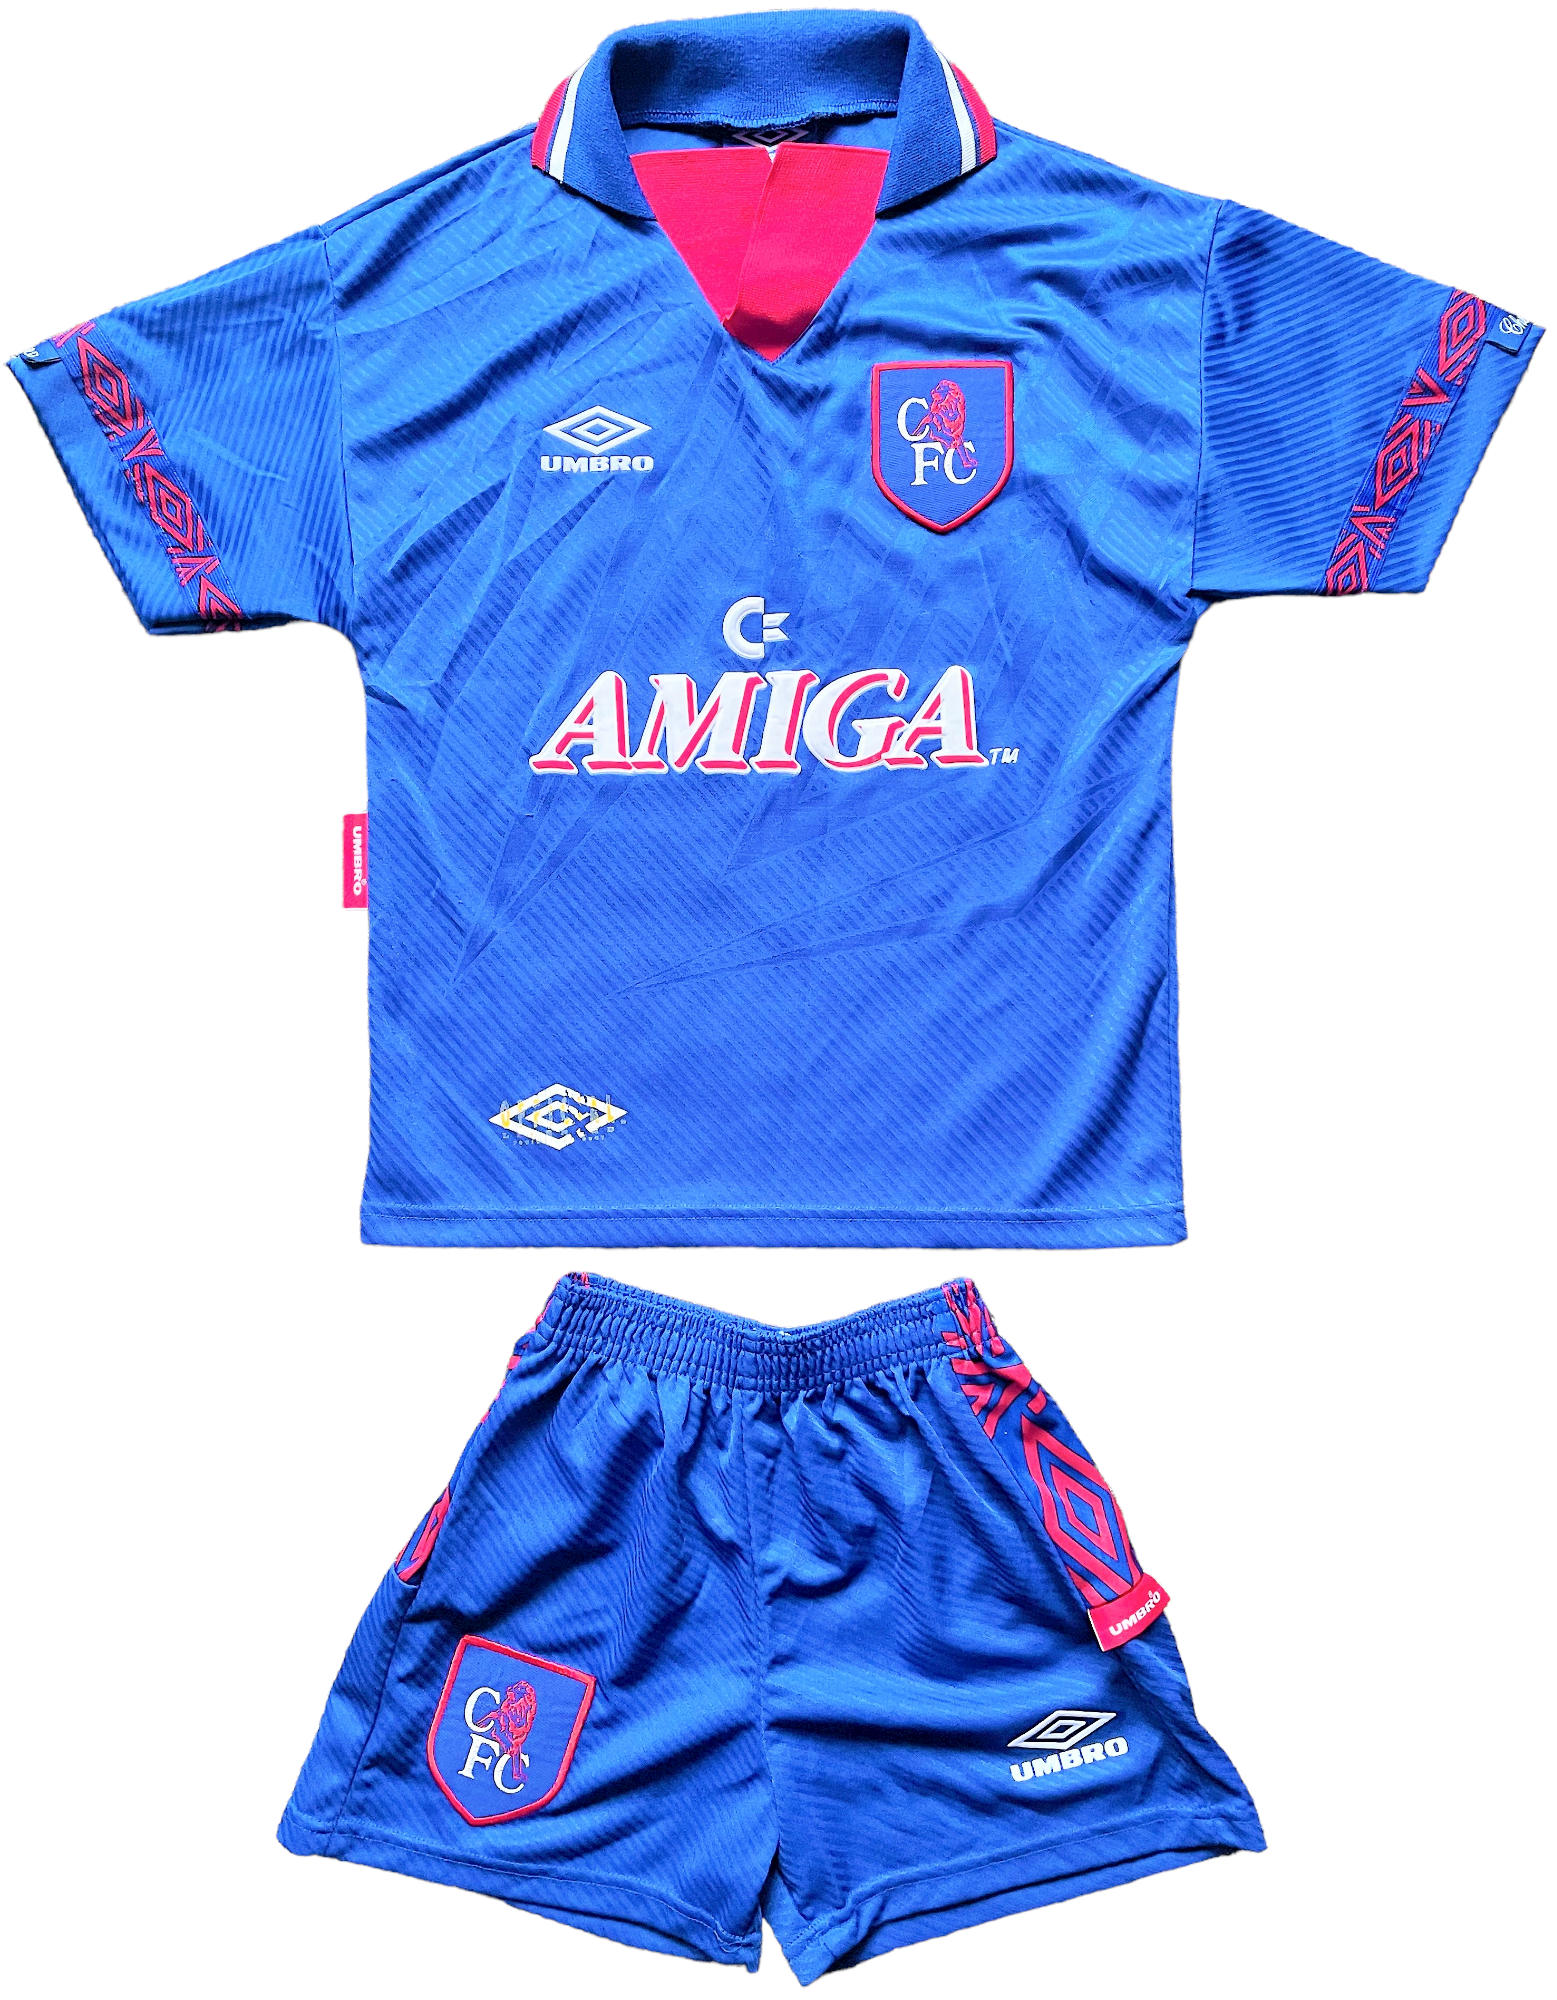 1993-94 Chelsea Home Kit (excellent) Large Boys